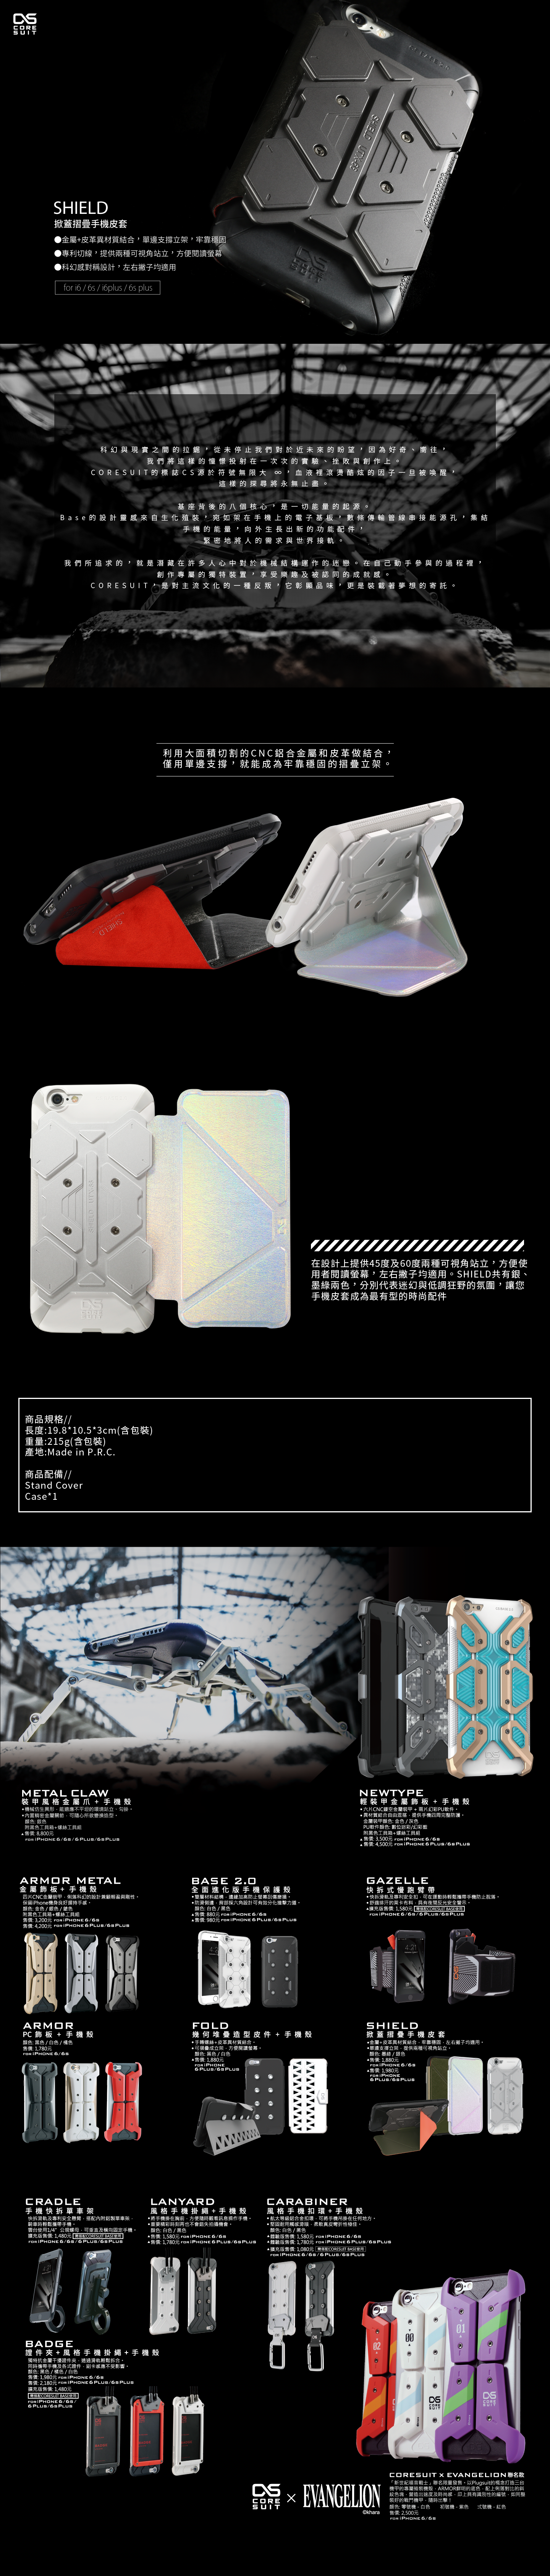 CORESUIT SHIELD掀蓋摺疊手機皮套 iPhone 6 Plus/6s Plus 白